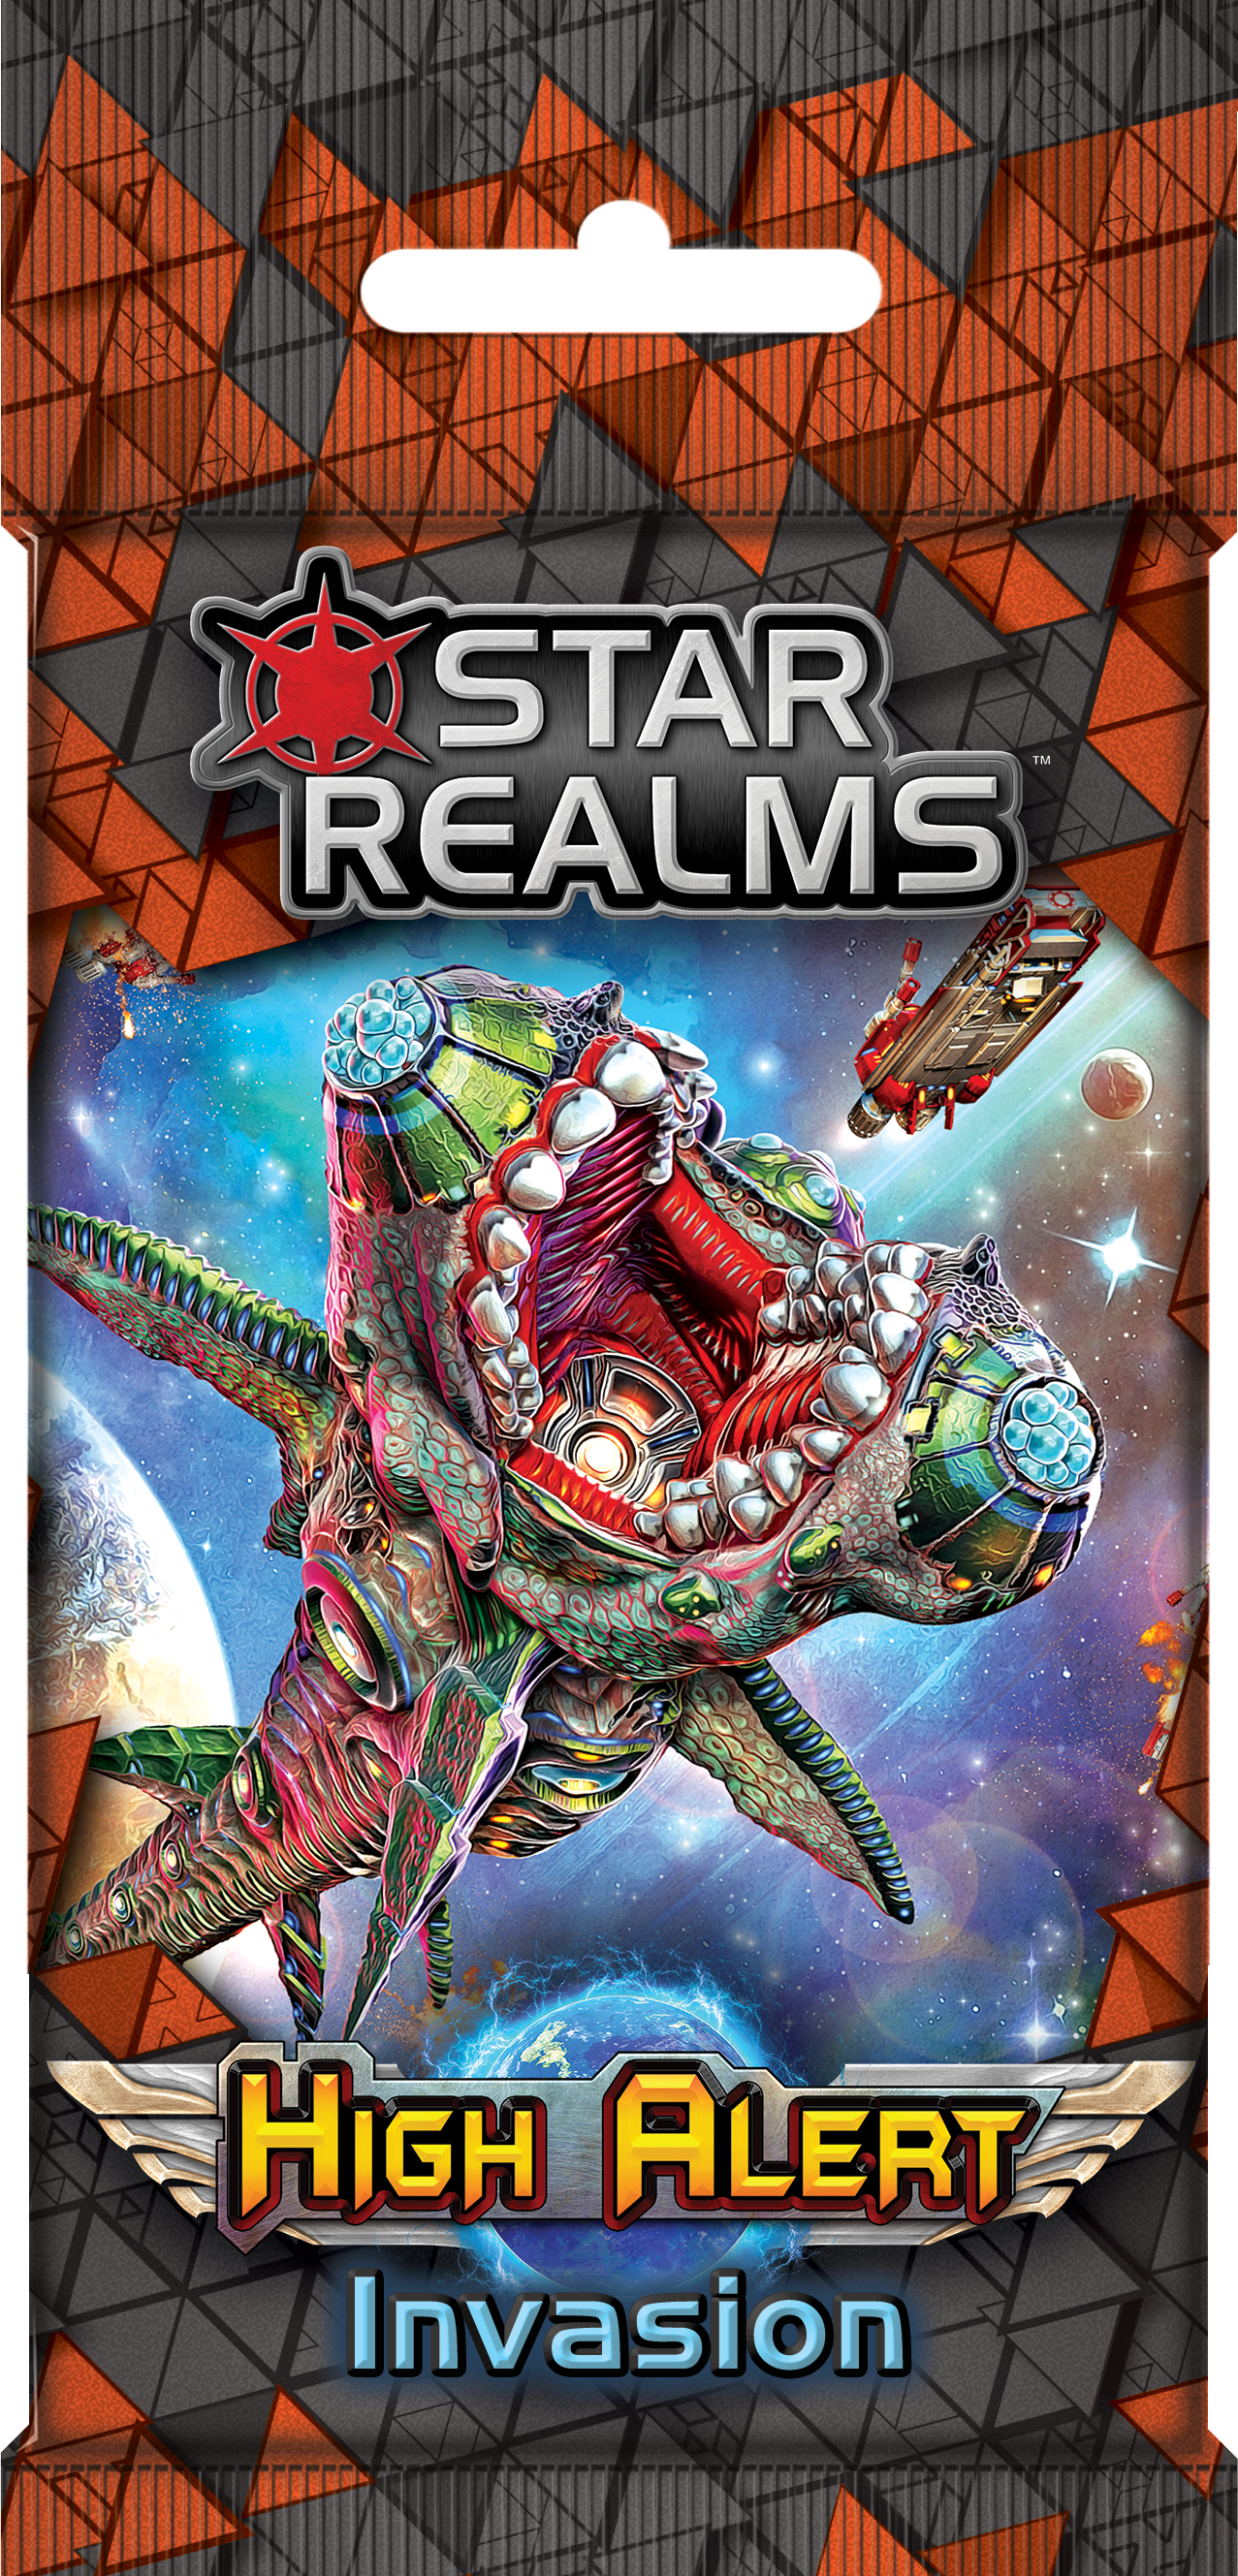 Star Realms - Extension United : Assaut